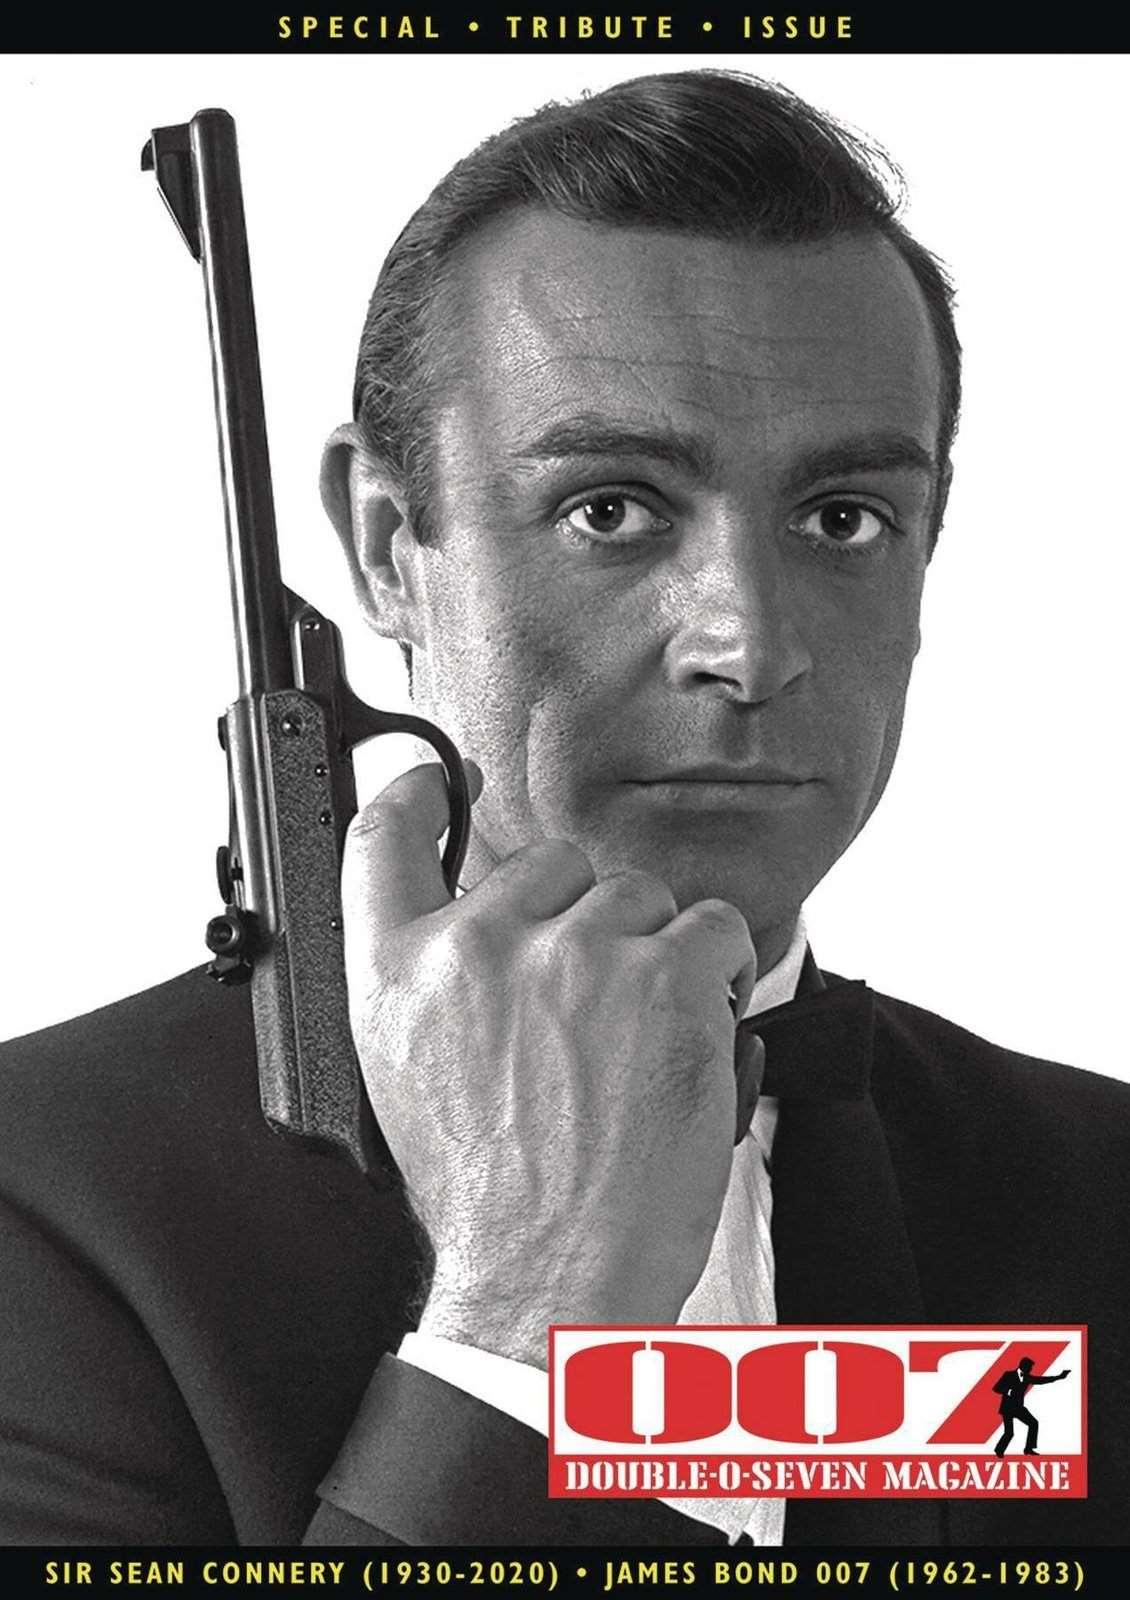 007 MAGAZINE SIE SEAN CONNERY TRIBUTE SPECIAL (C: 0-1-1) (SHIPS 03-17-21) - PCKComics.com